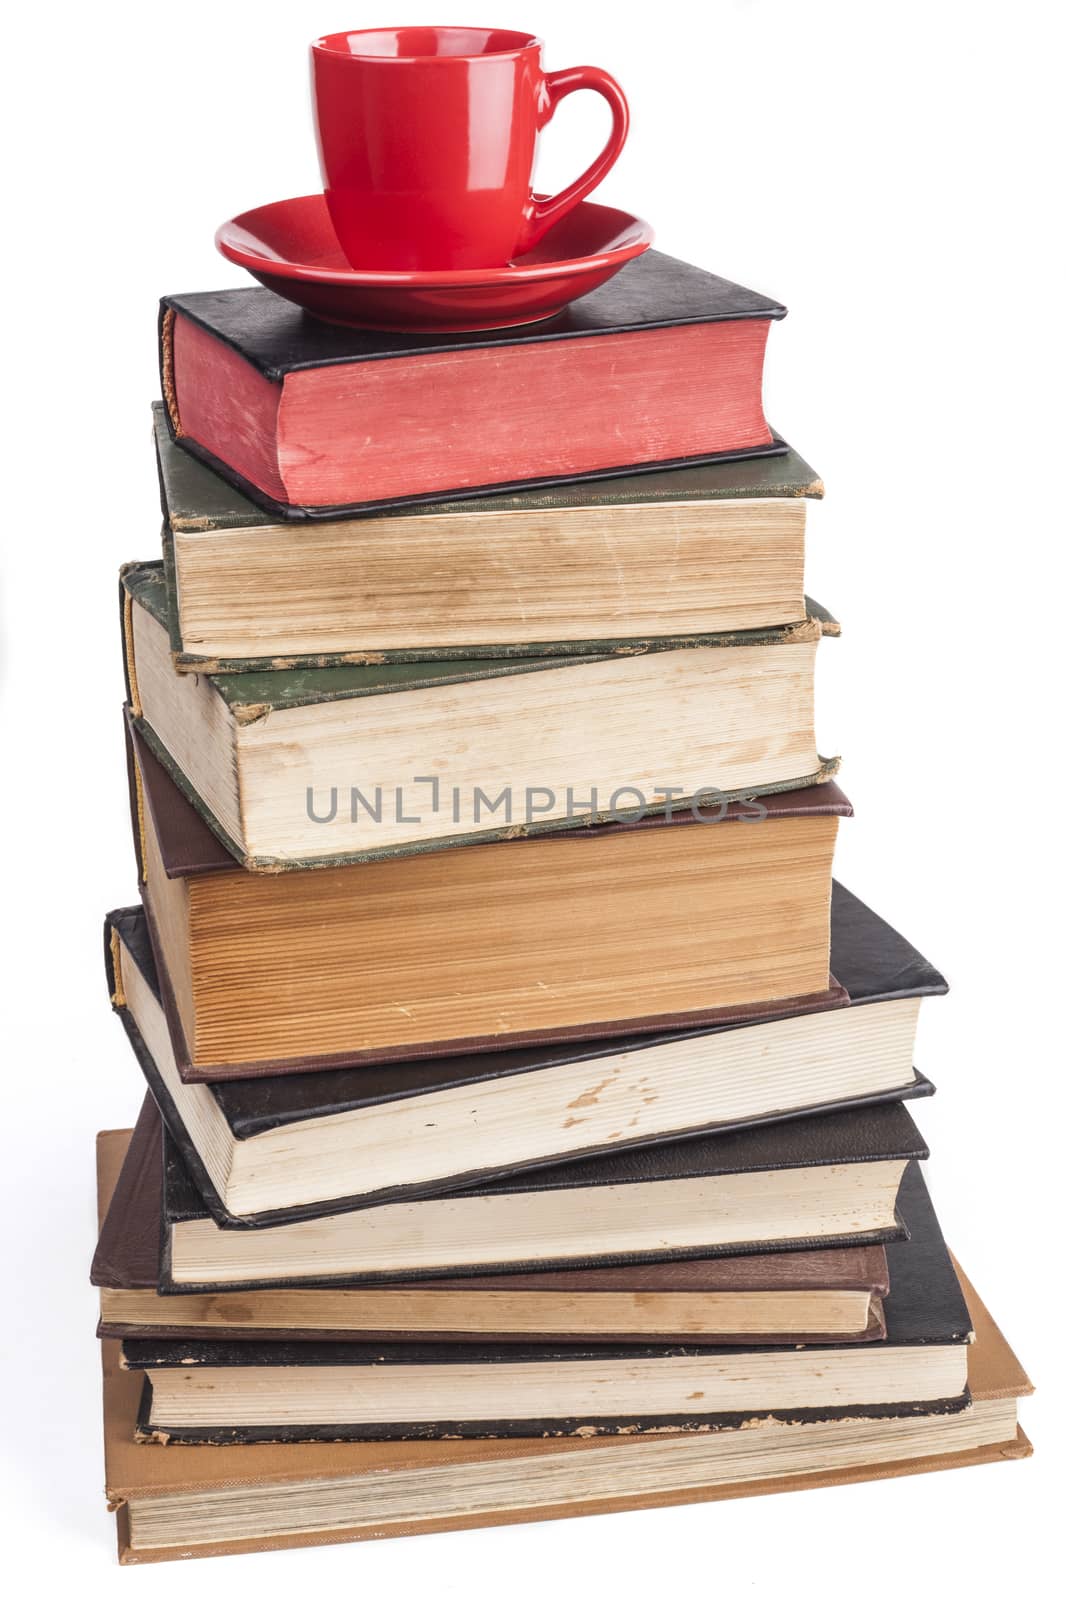 REd Mug on Books by orcearo